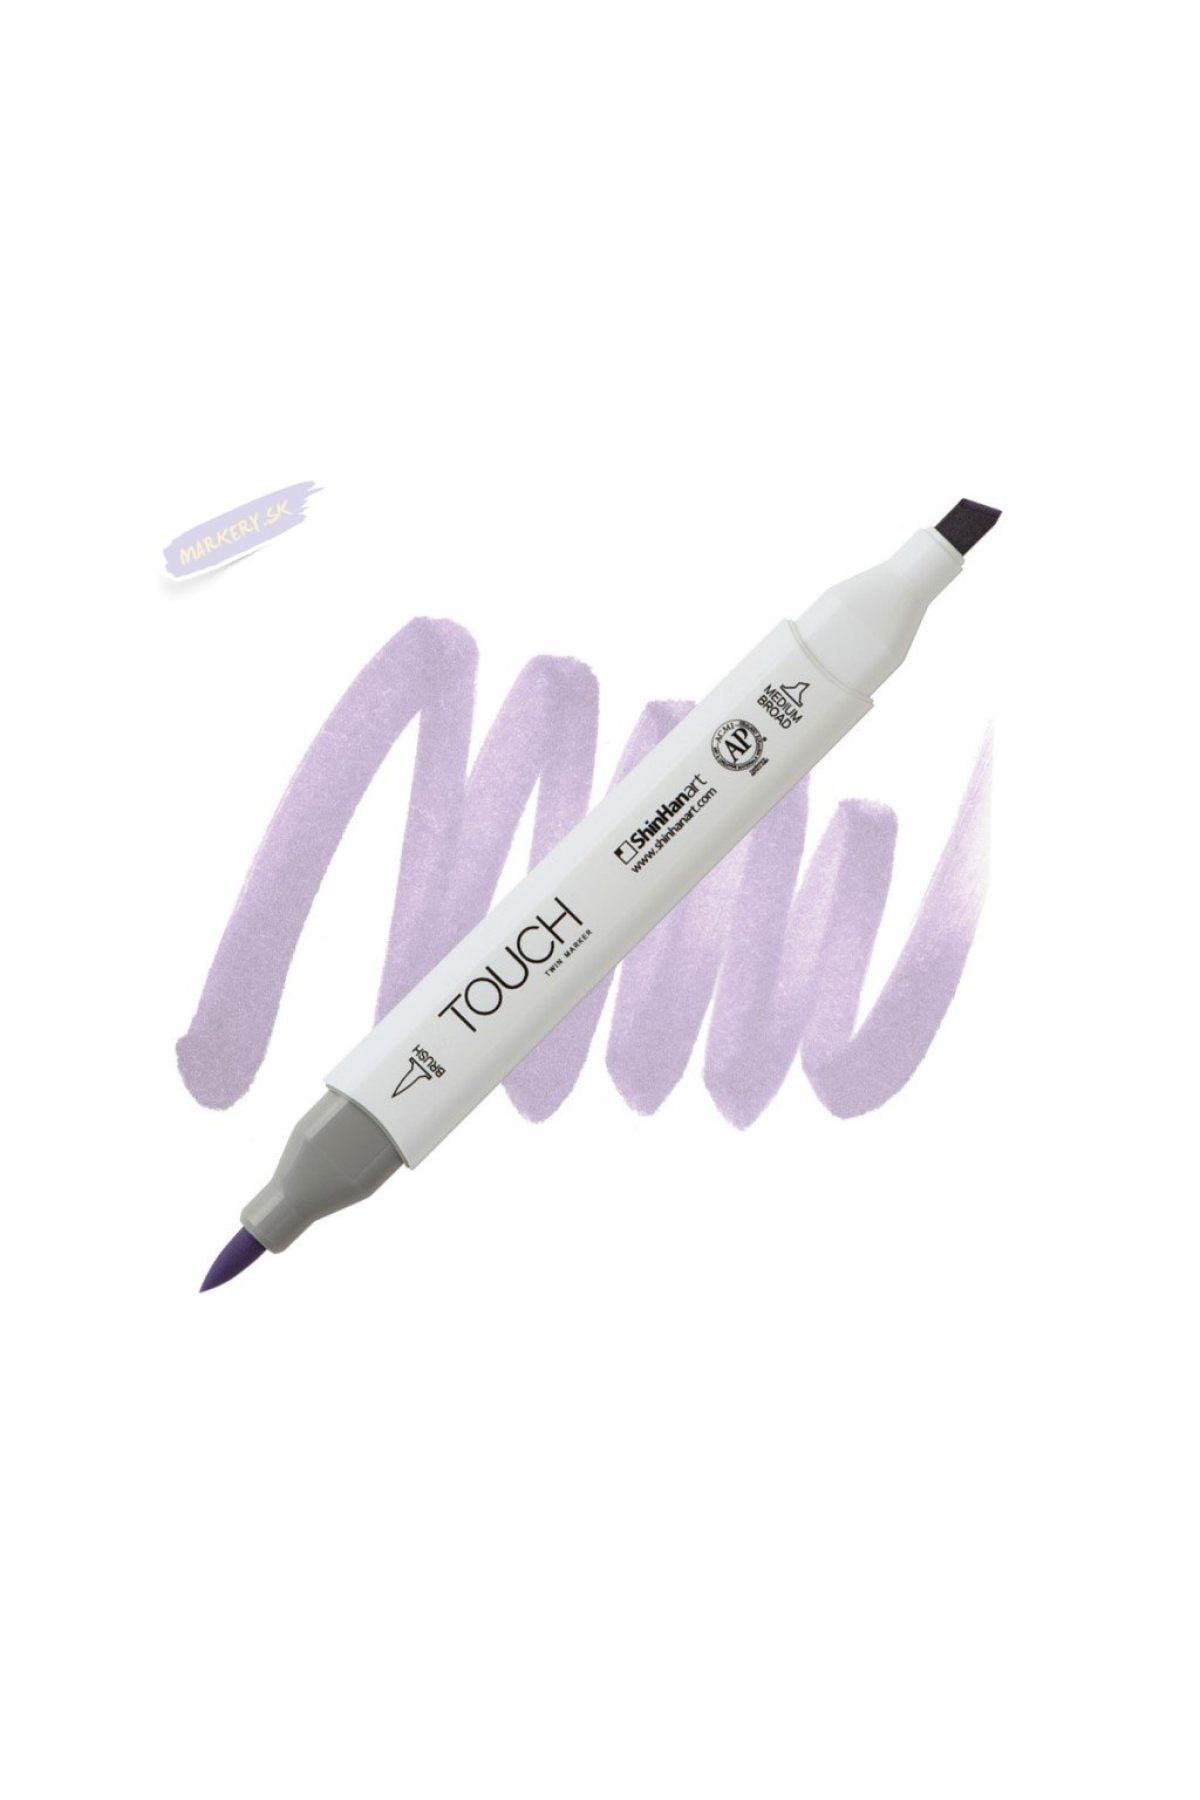 Shinhan Art Touch Twın Brush Pen : Çift Taraflı Marker : P145 Pale Lavender